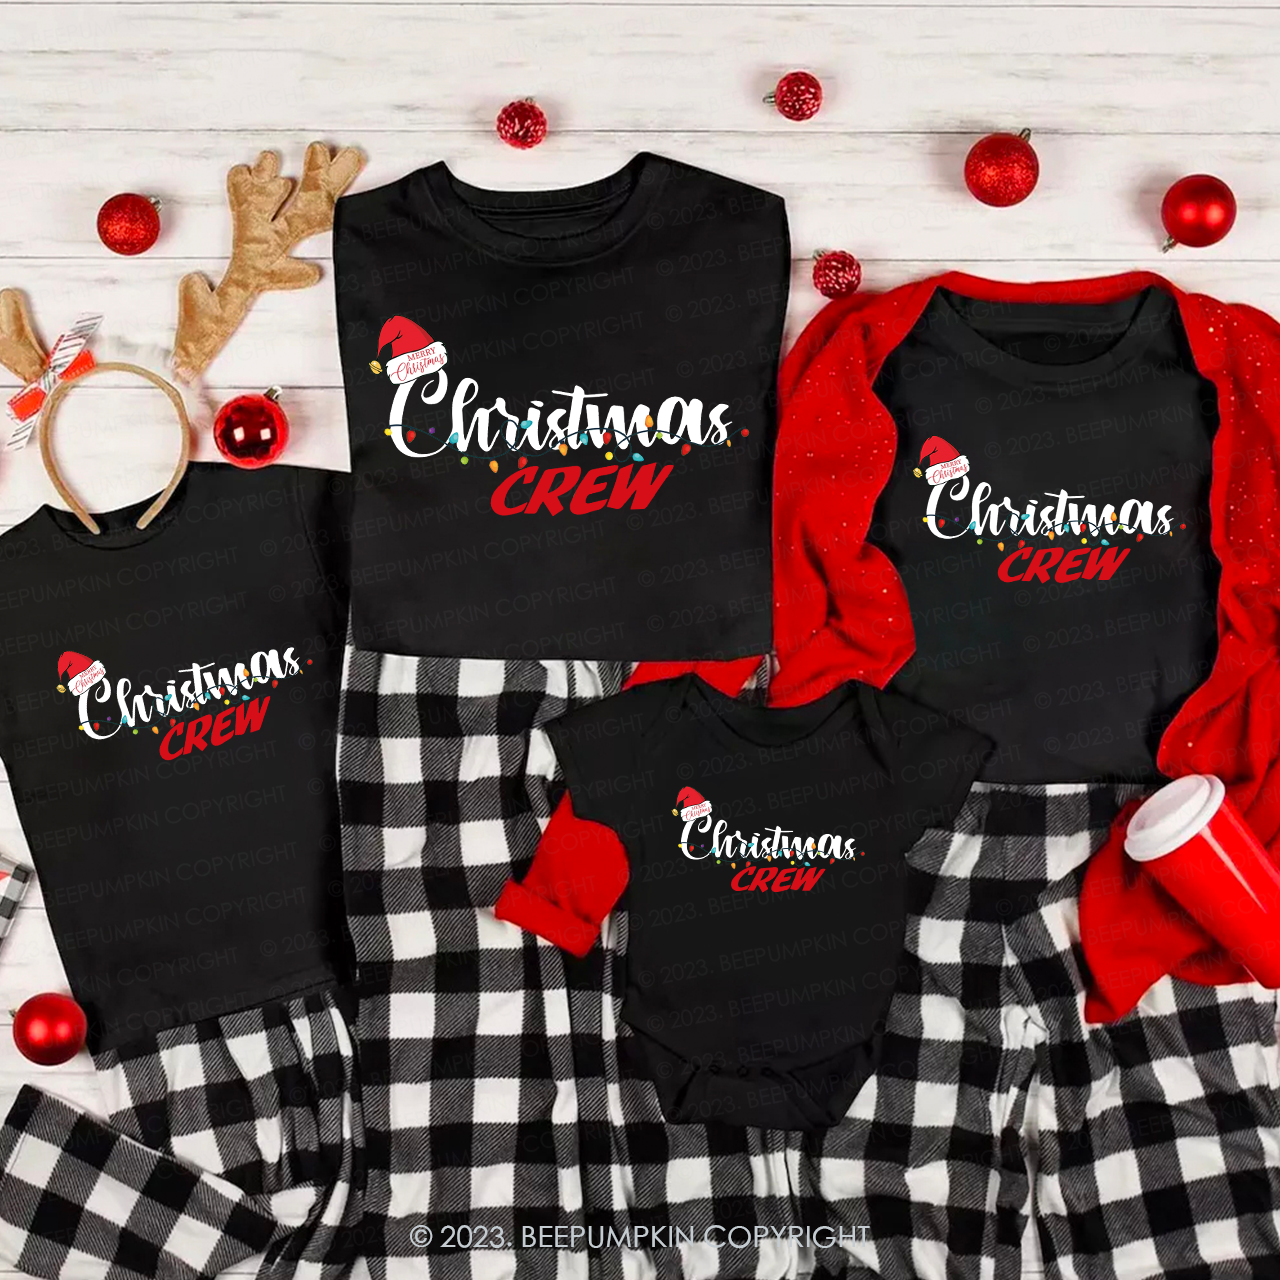  Holiday Christmas Crew Squad Matching Family T-shirts Beepumpkin 